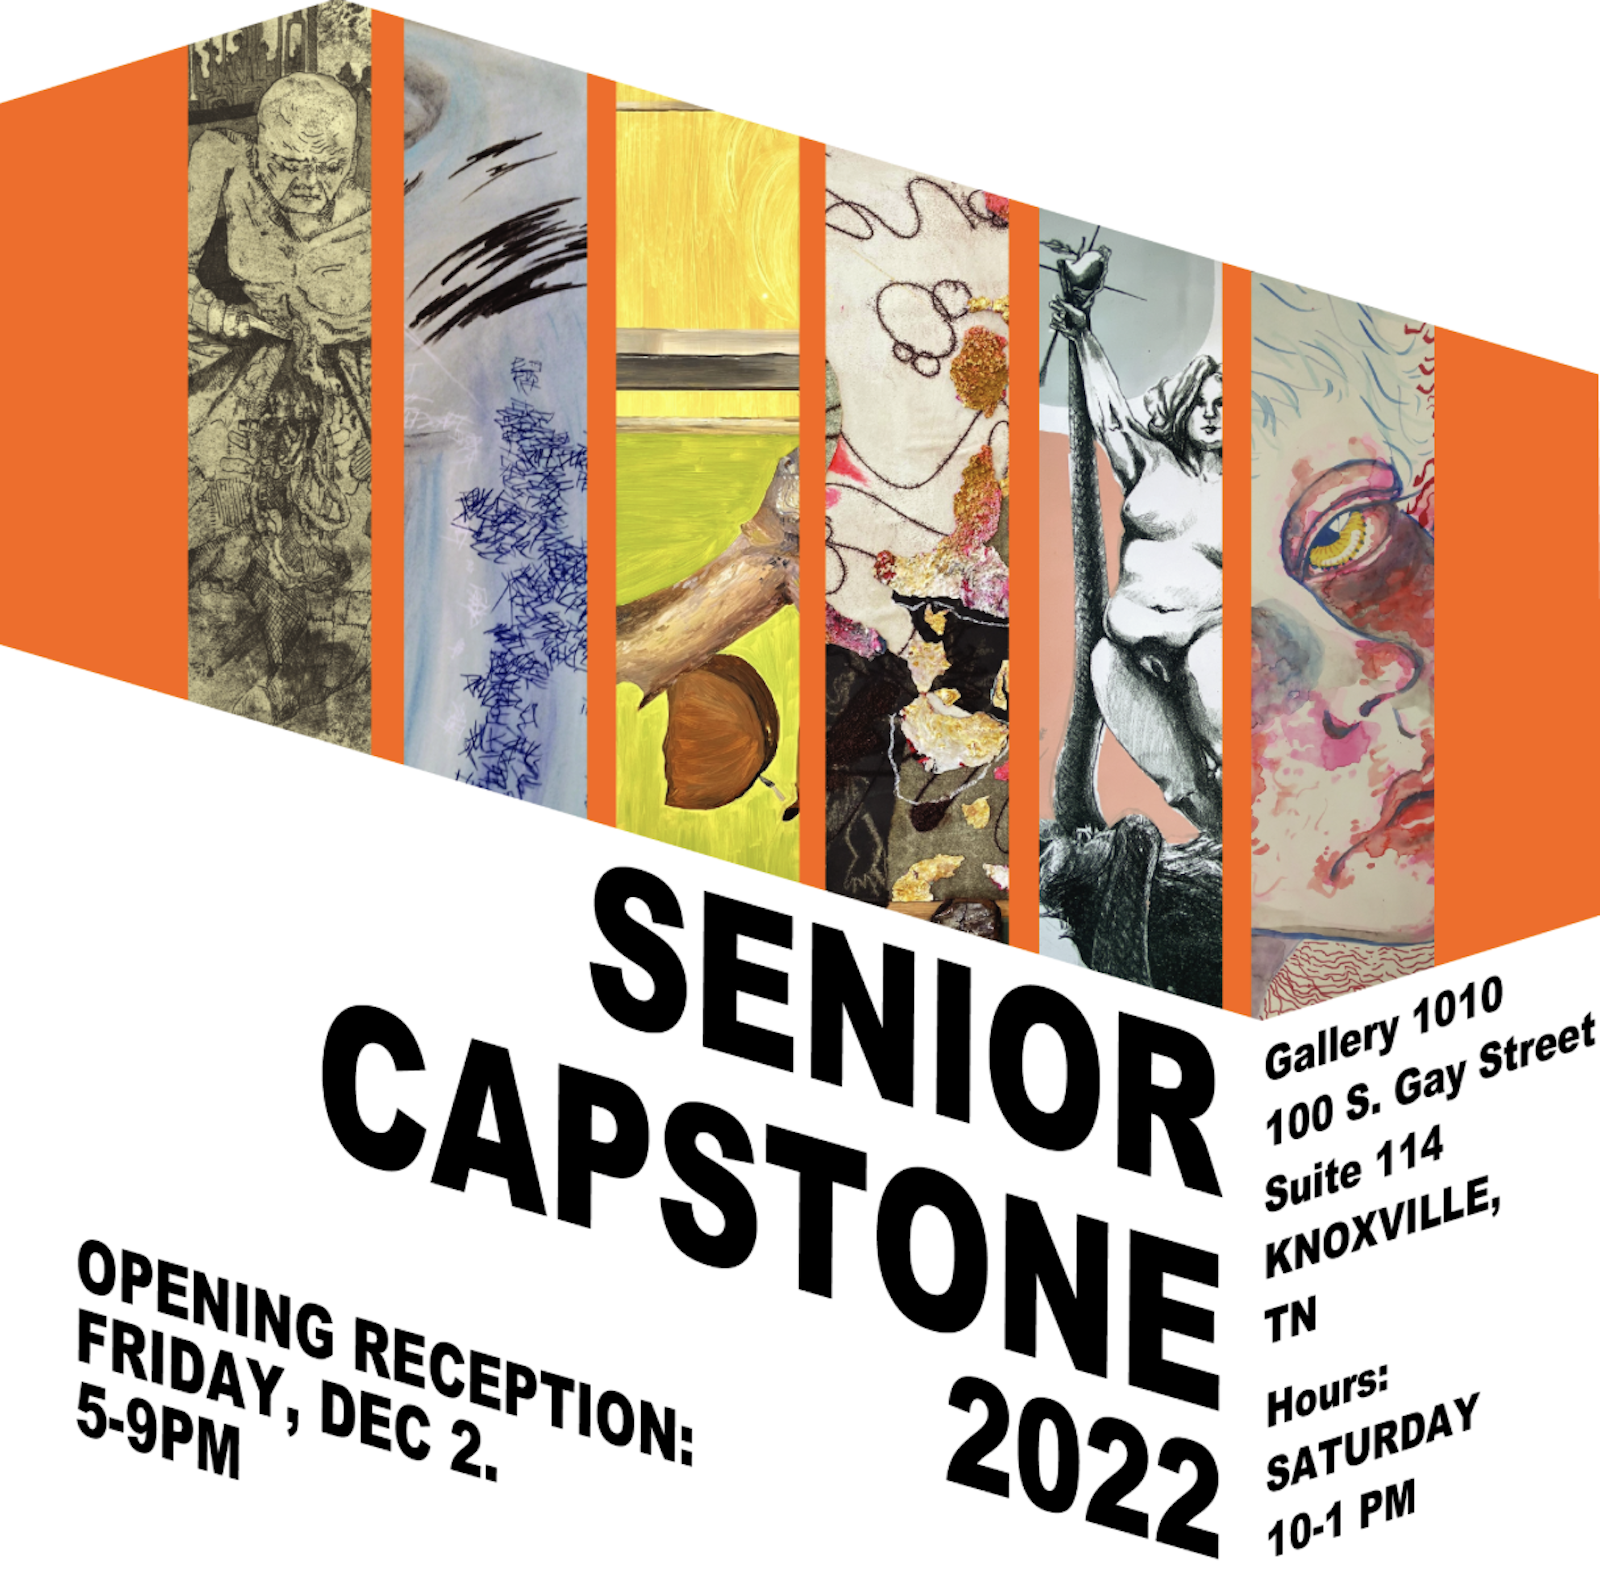 Advertisement for the Senior Capstone 2022 opening reception